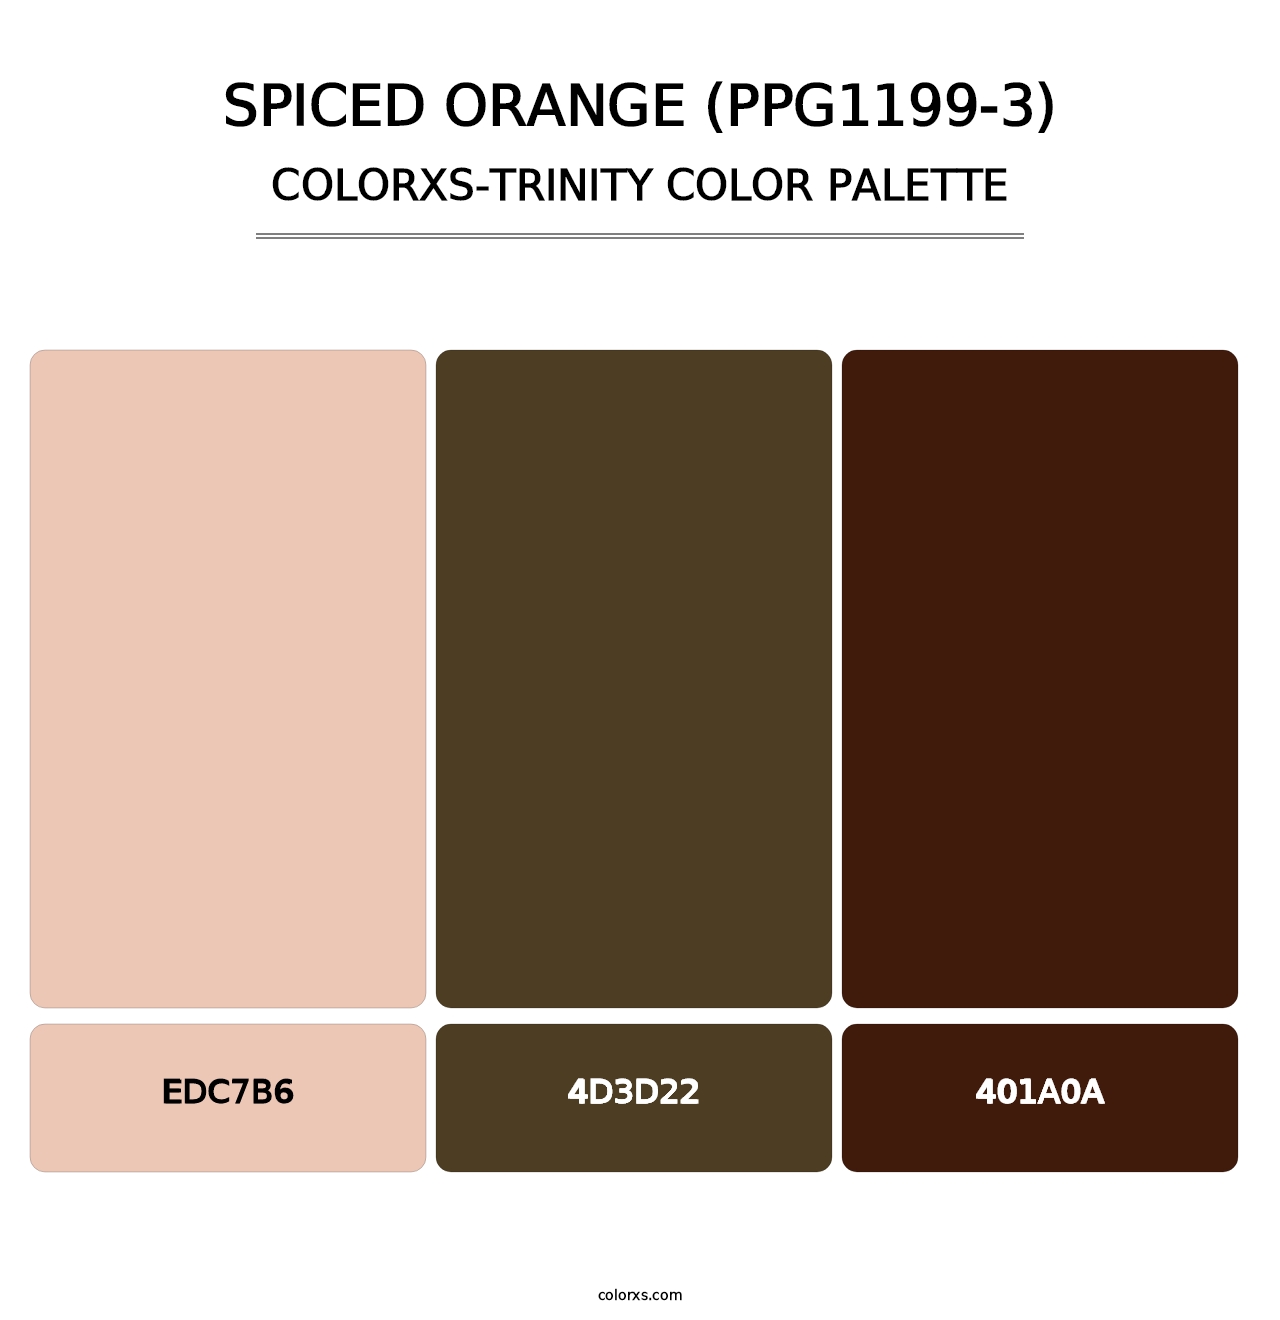 Spiced Orange (PPG1199-3) - Colorxs Trinity Palette